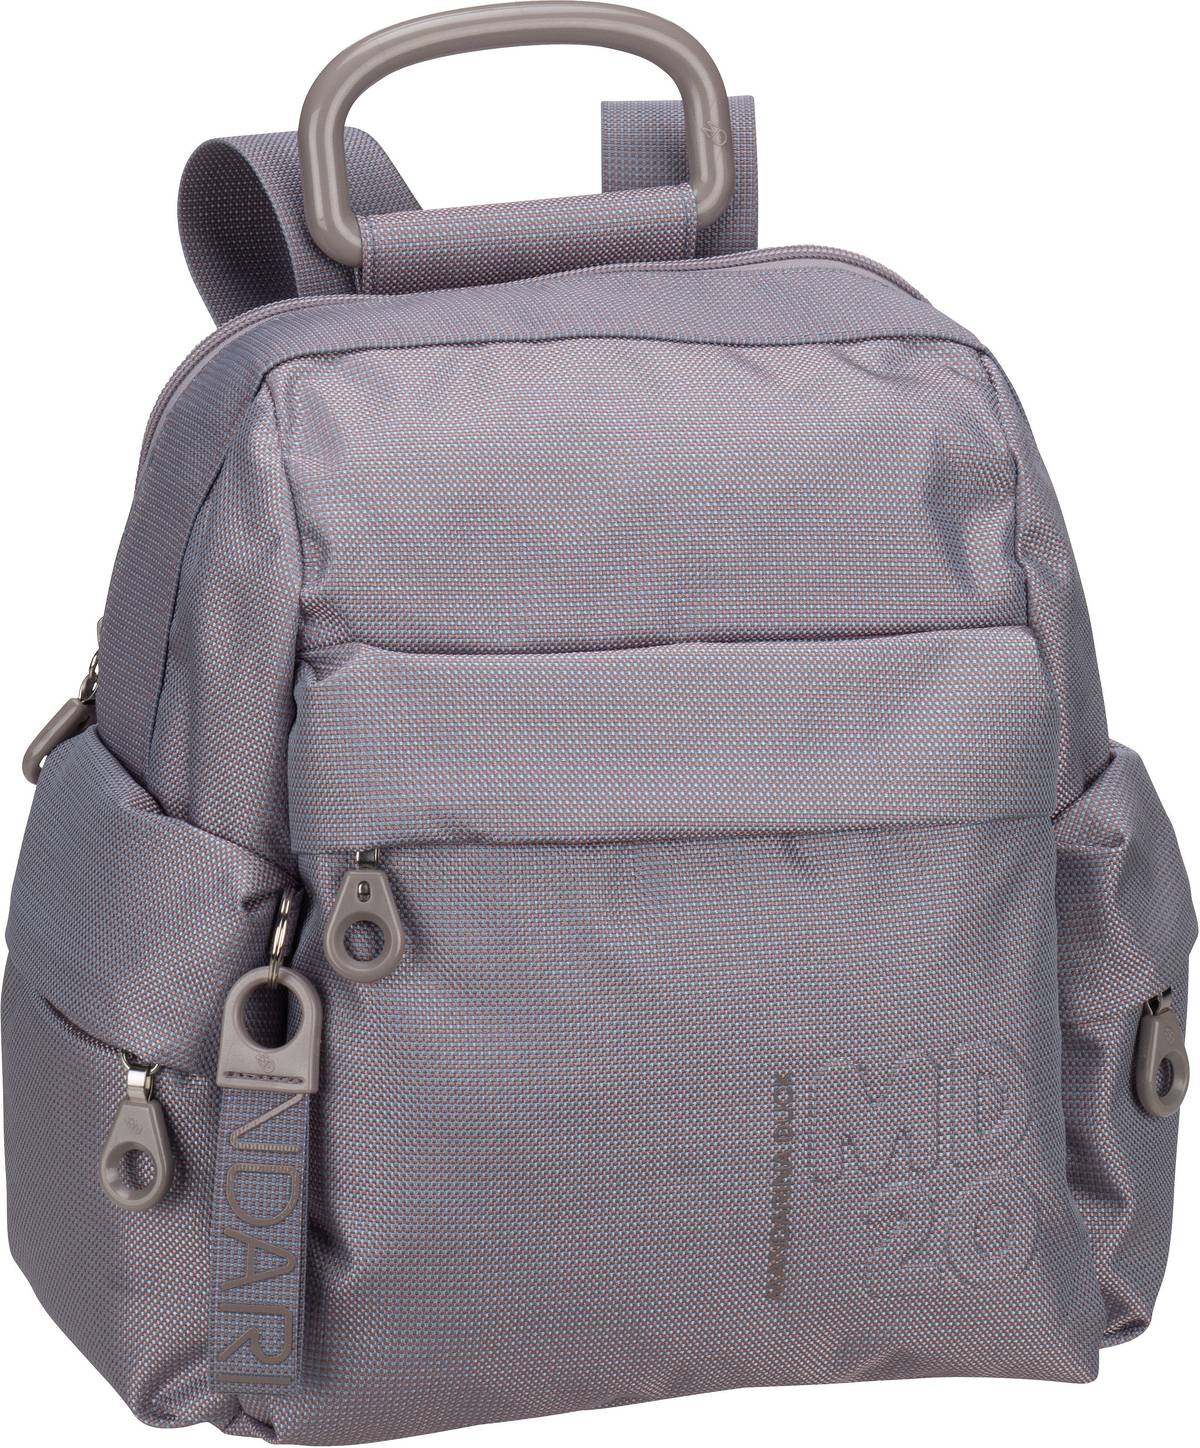 Mandarina Duck MD20 Small Backpack QMTT1 - Summer Fog